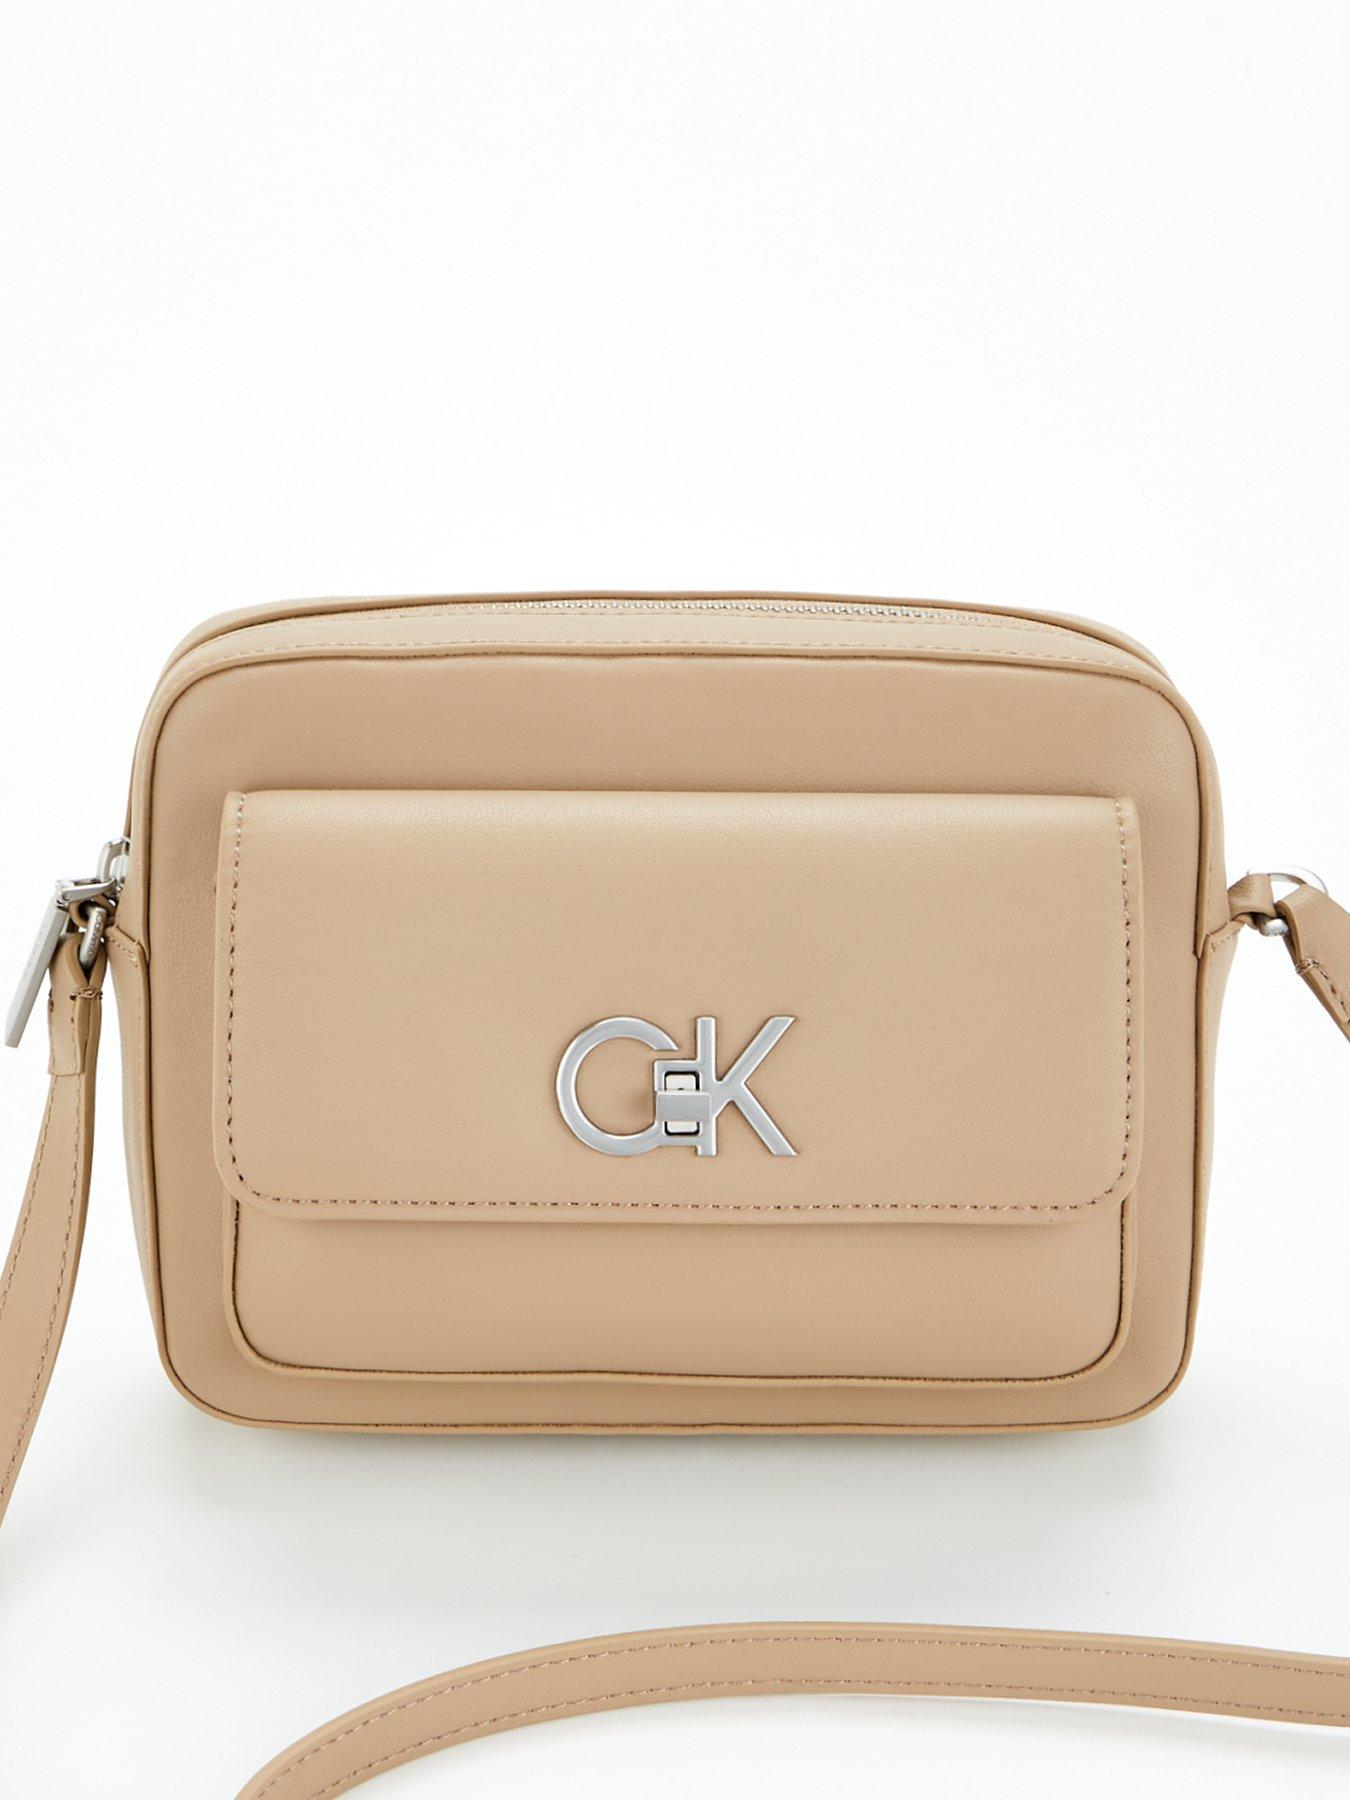 New Calvin Klein Tote - Women's handbags